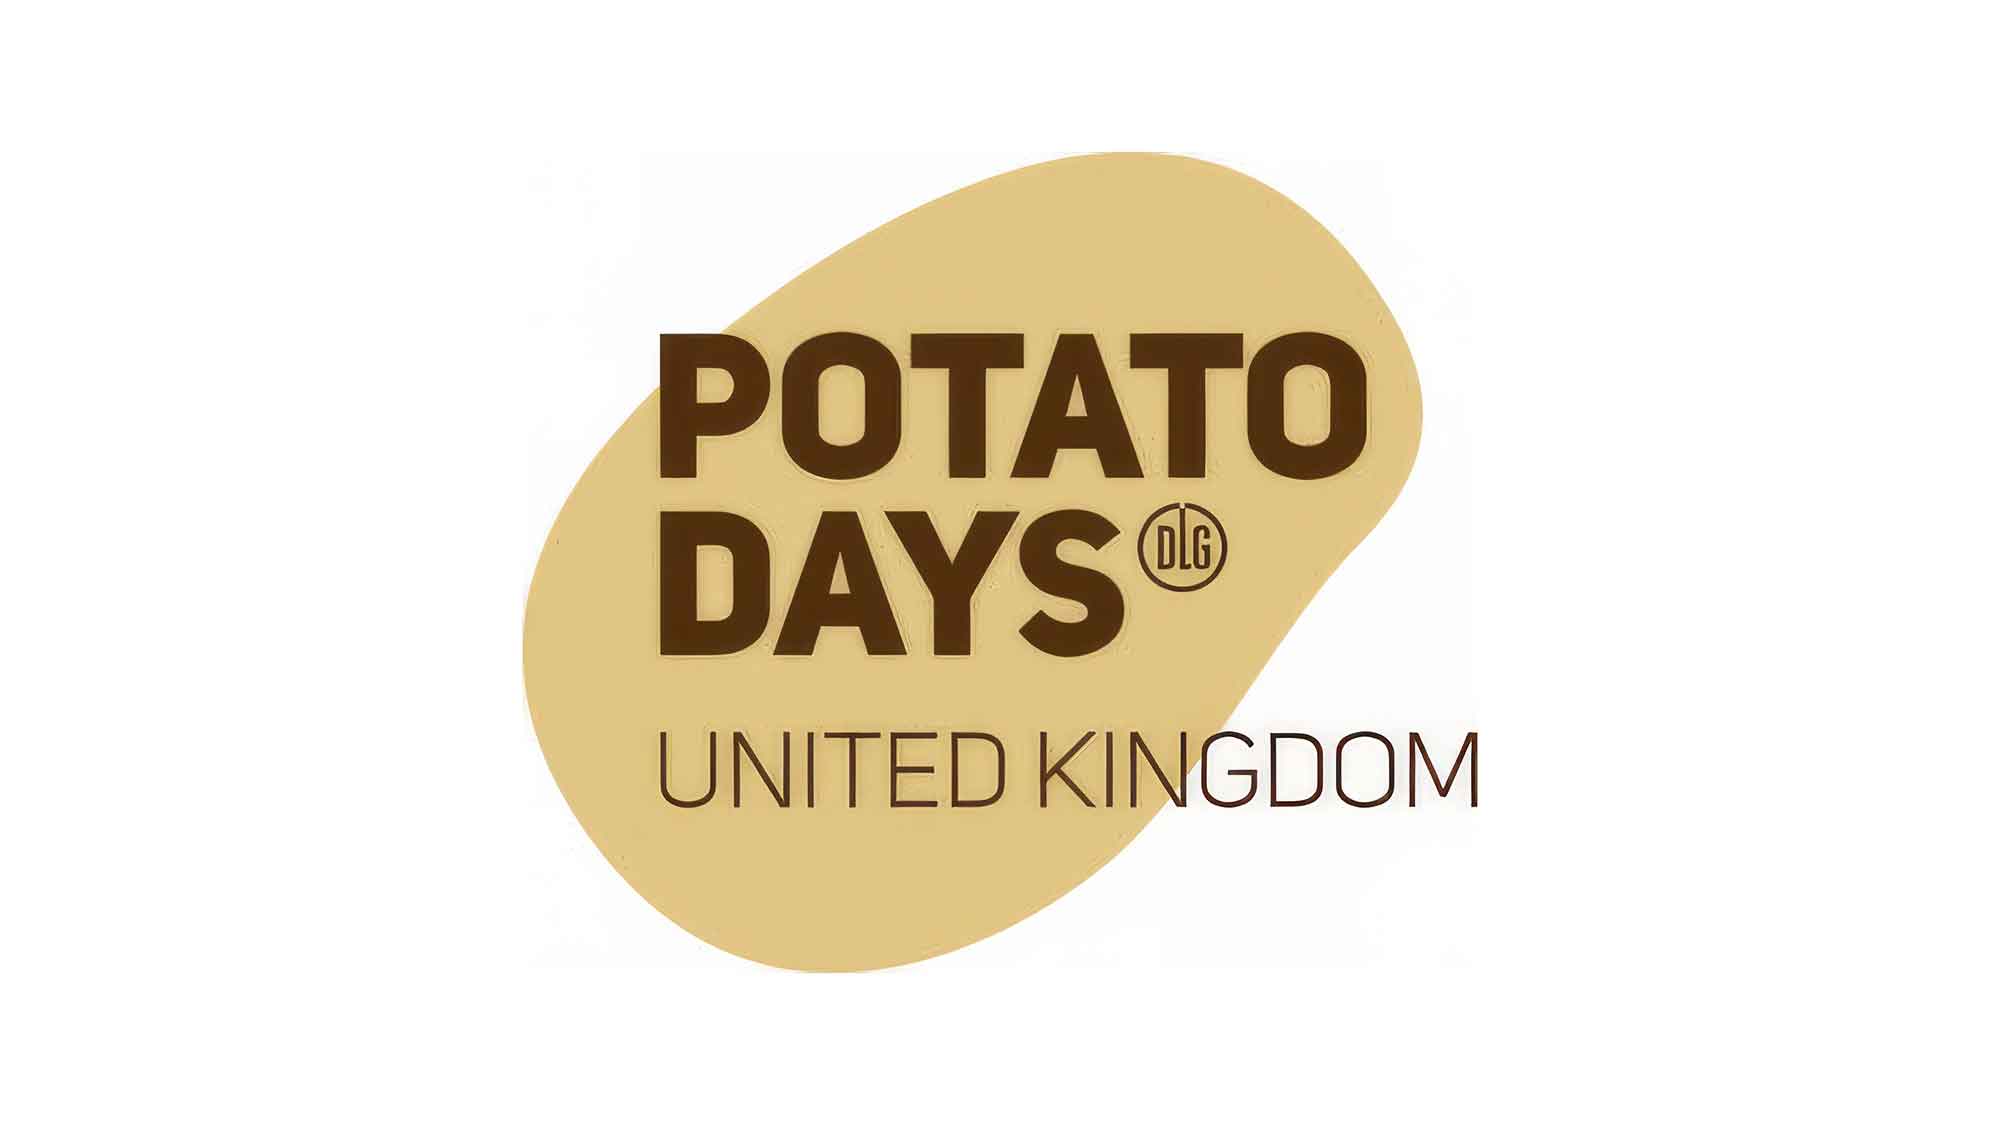 DLG veranstaltet erstmalig Potato Days UK